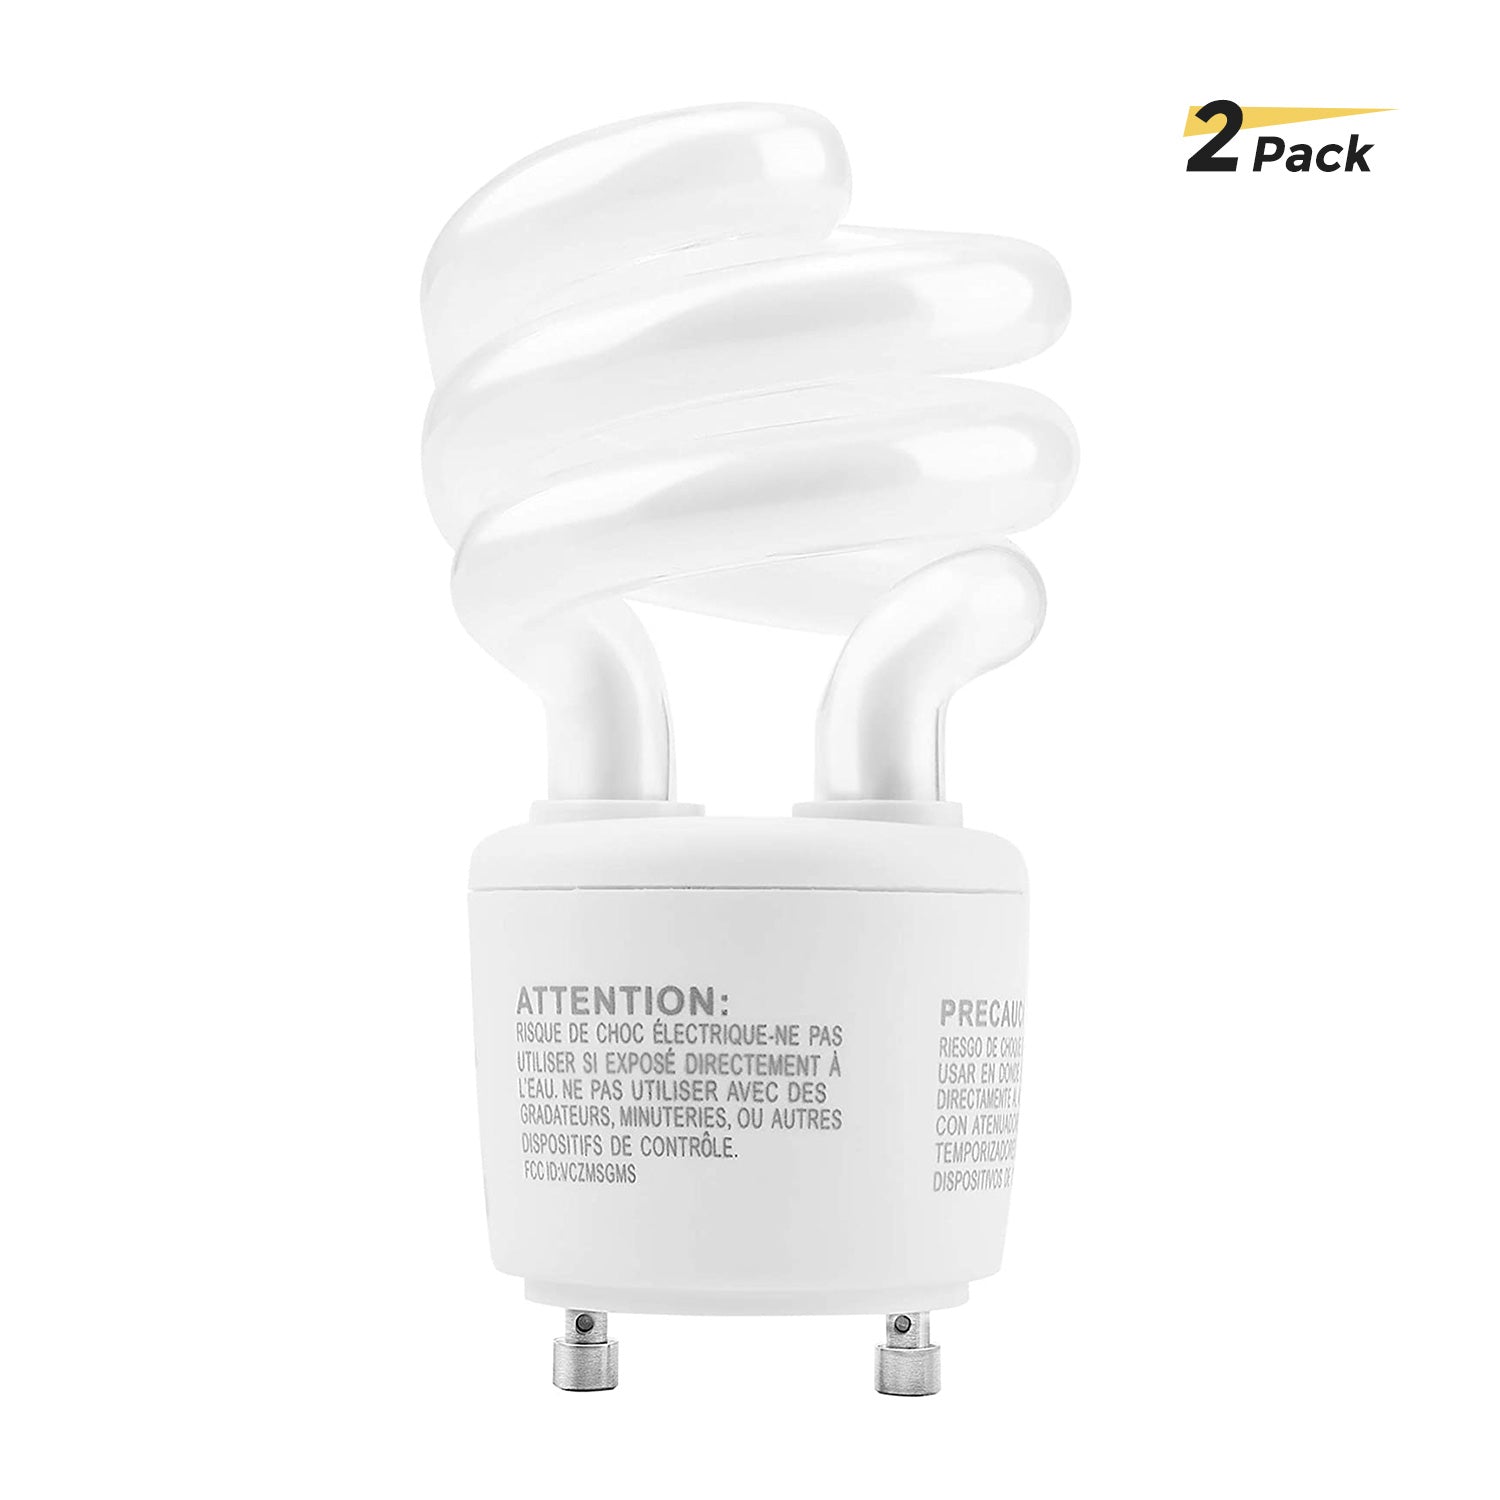 UL-Listed 13w Gu24 CFL Light Bulbs 2700k Warm White